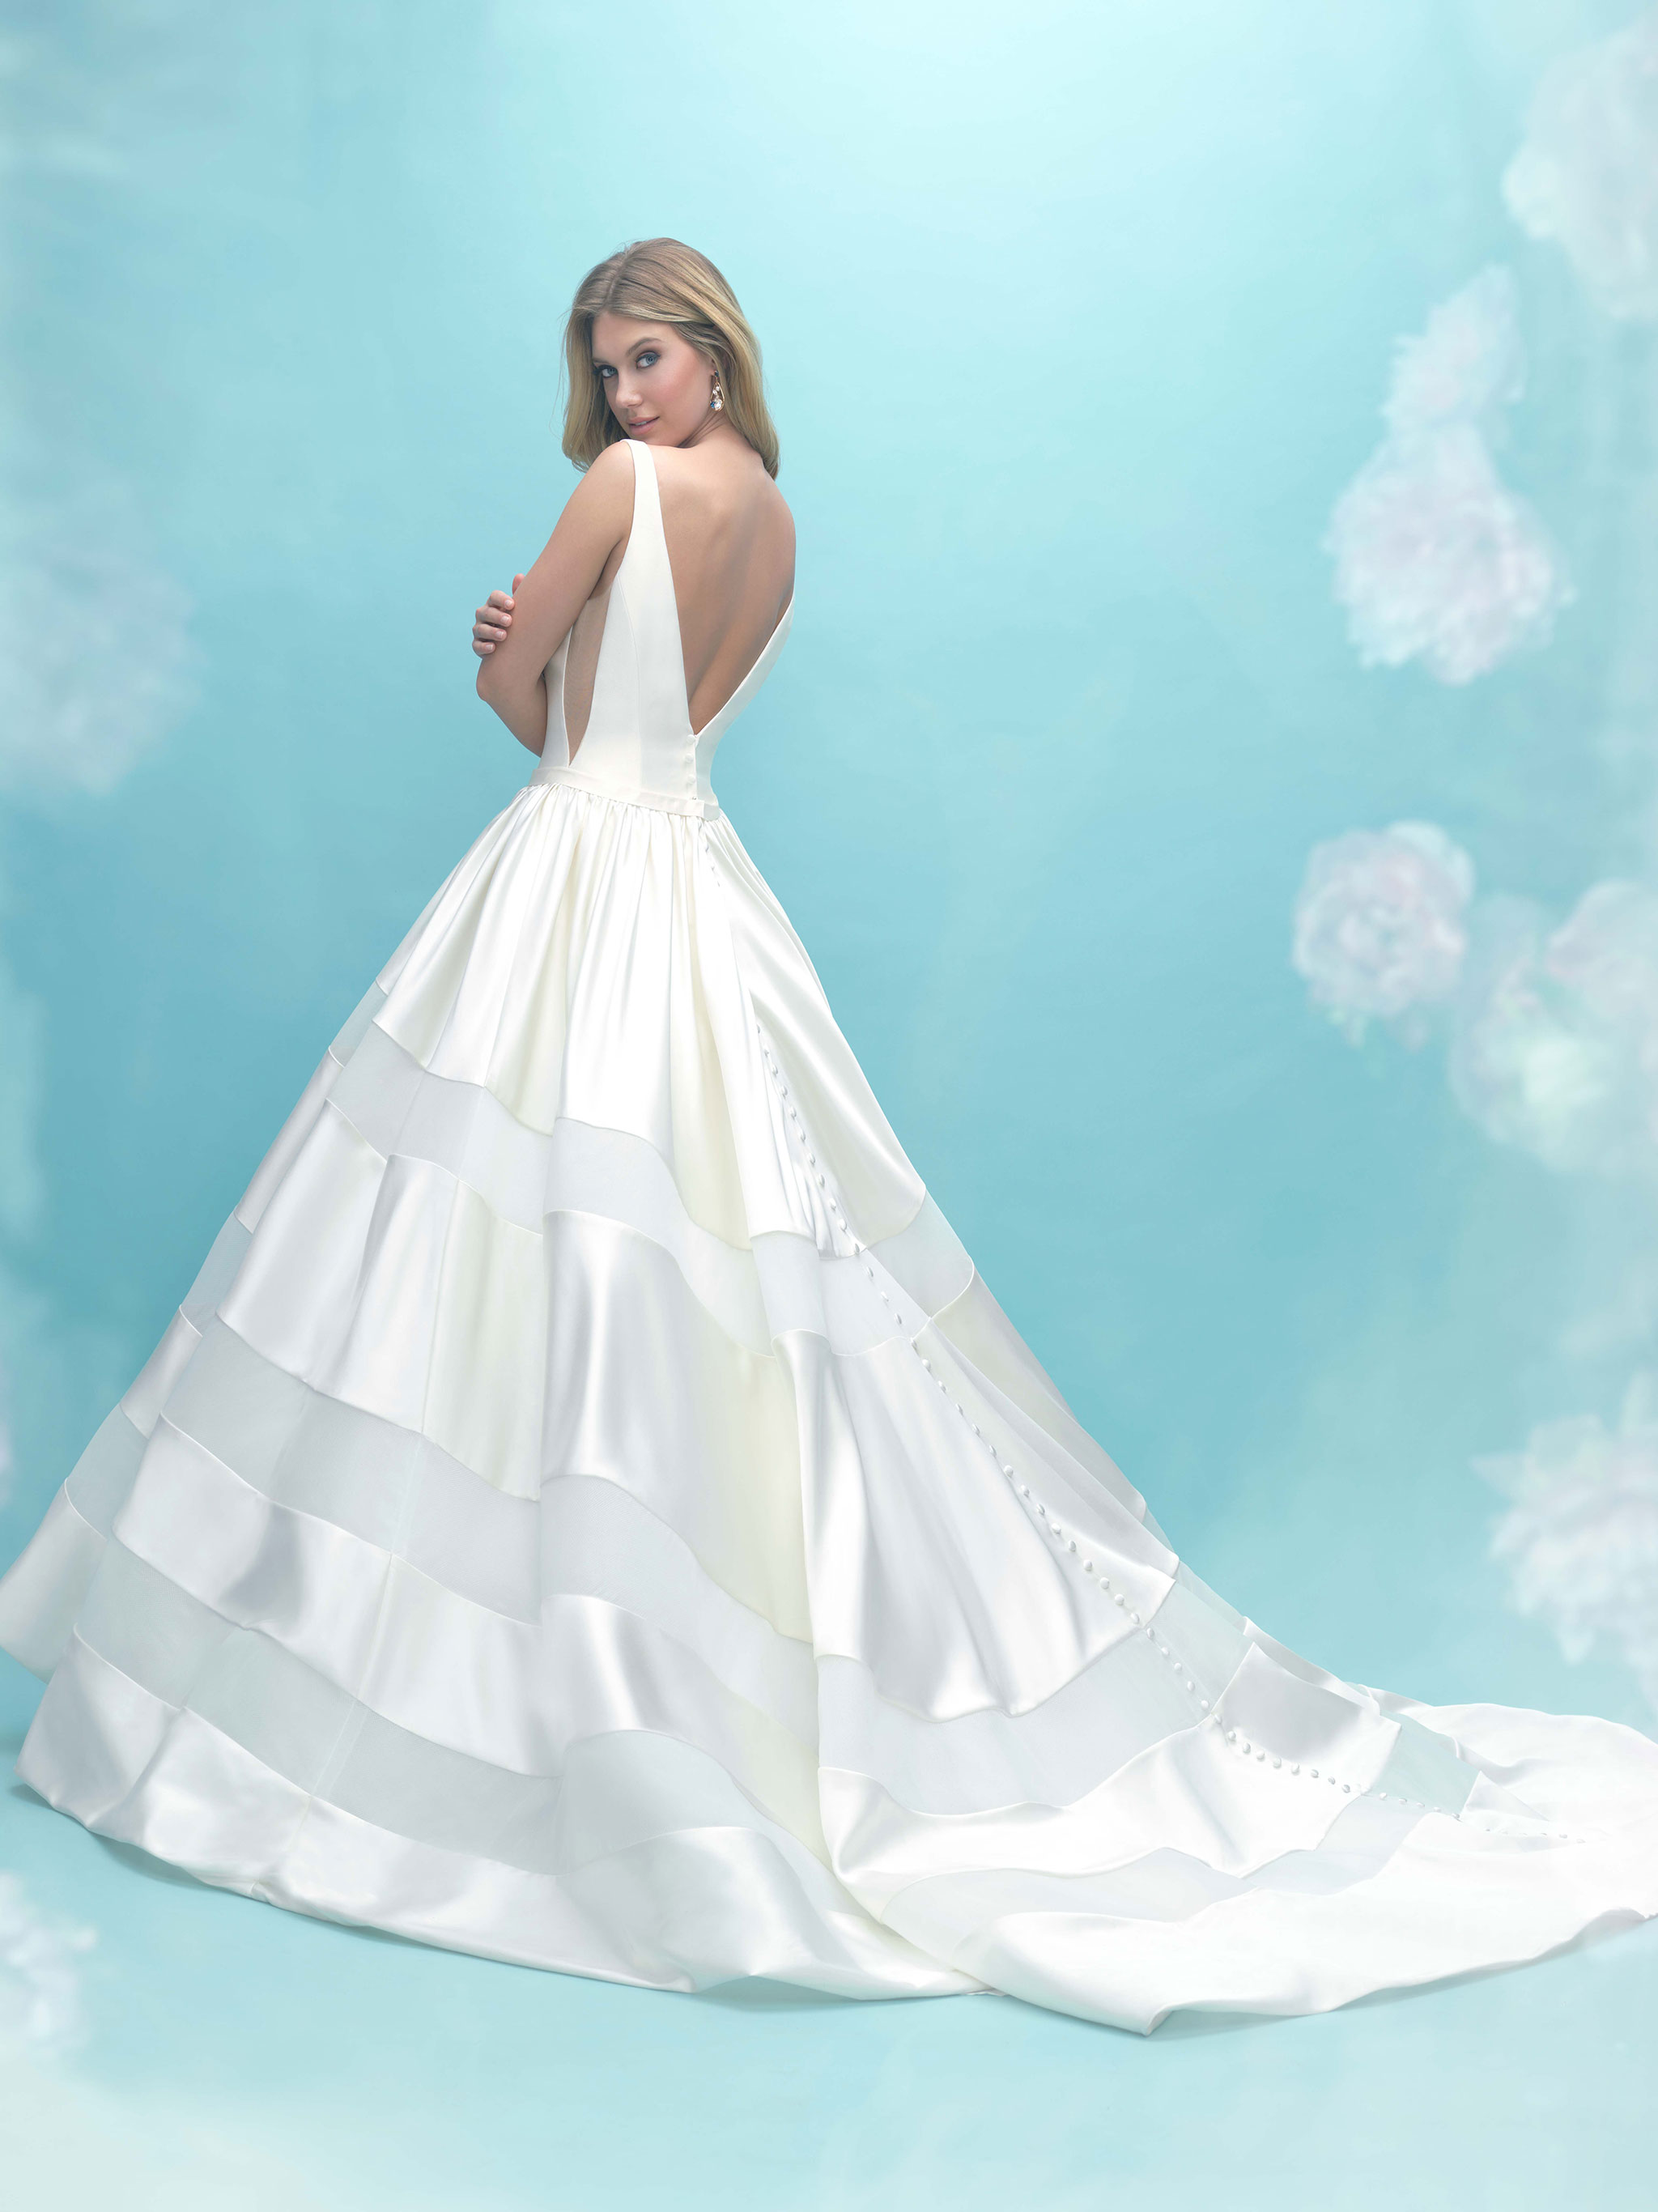 Model wearing a white dress 2